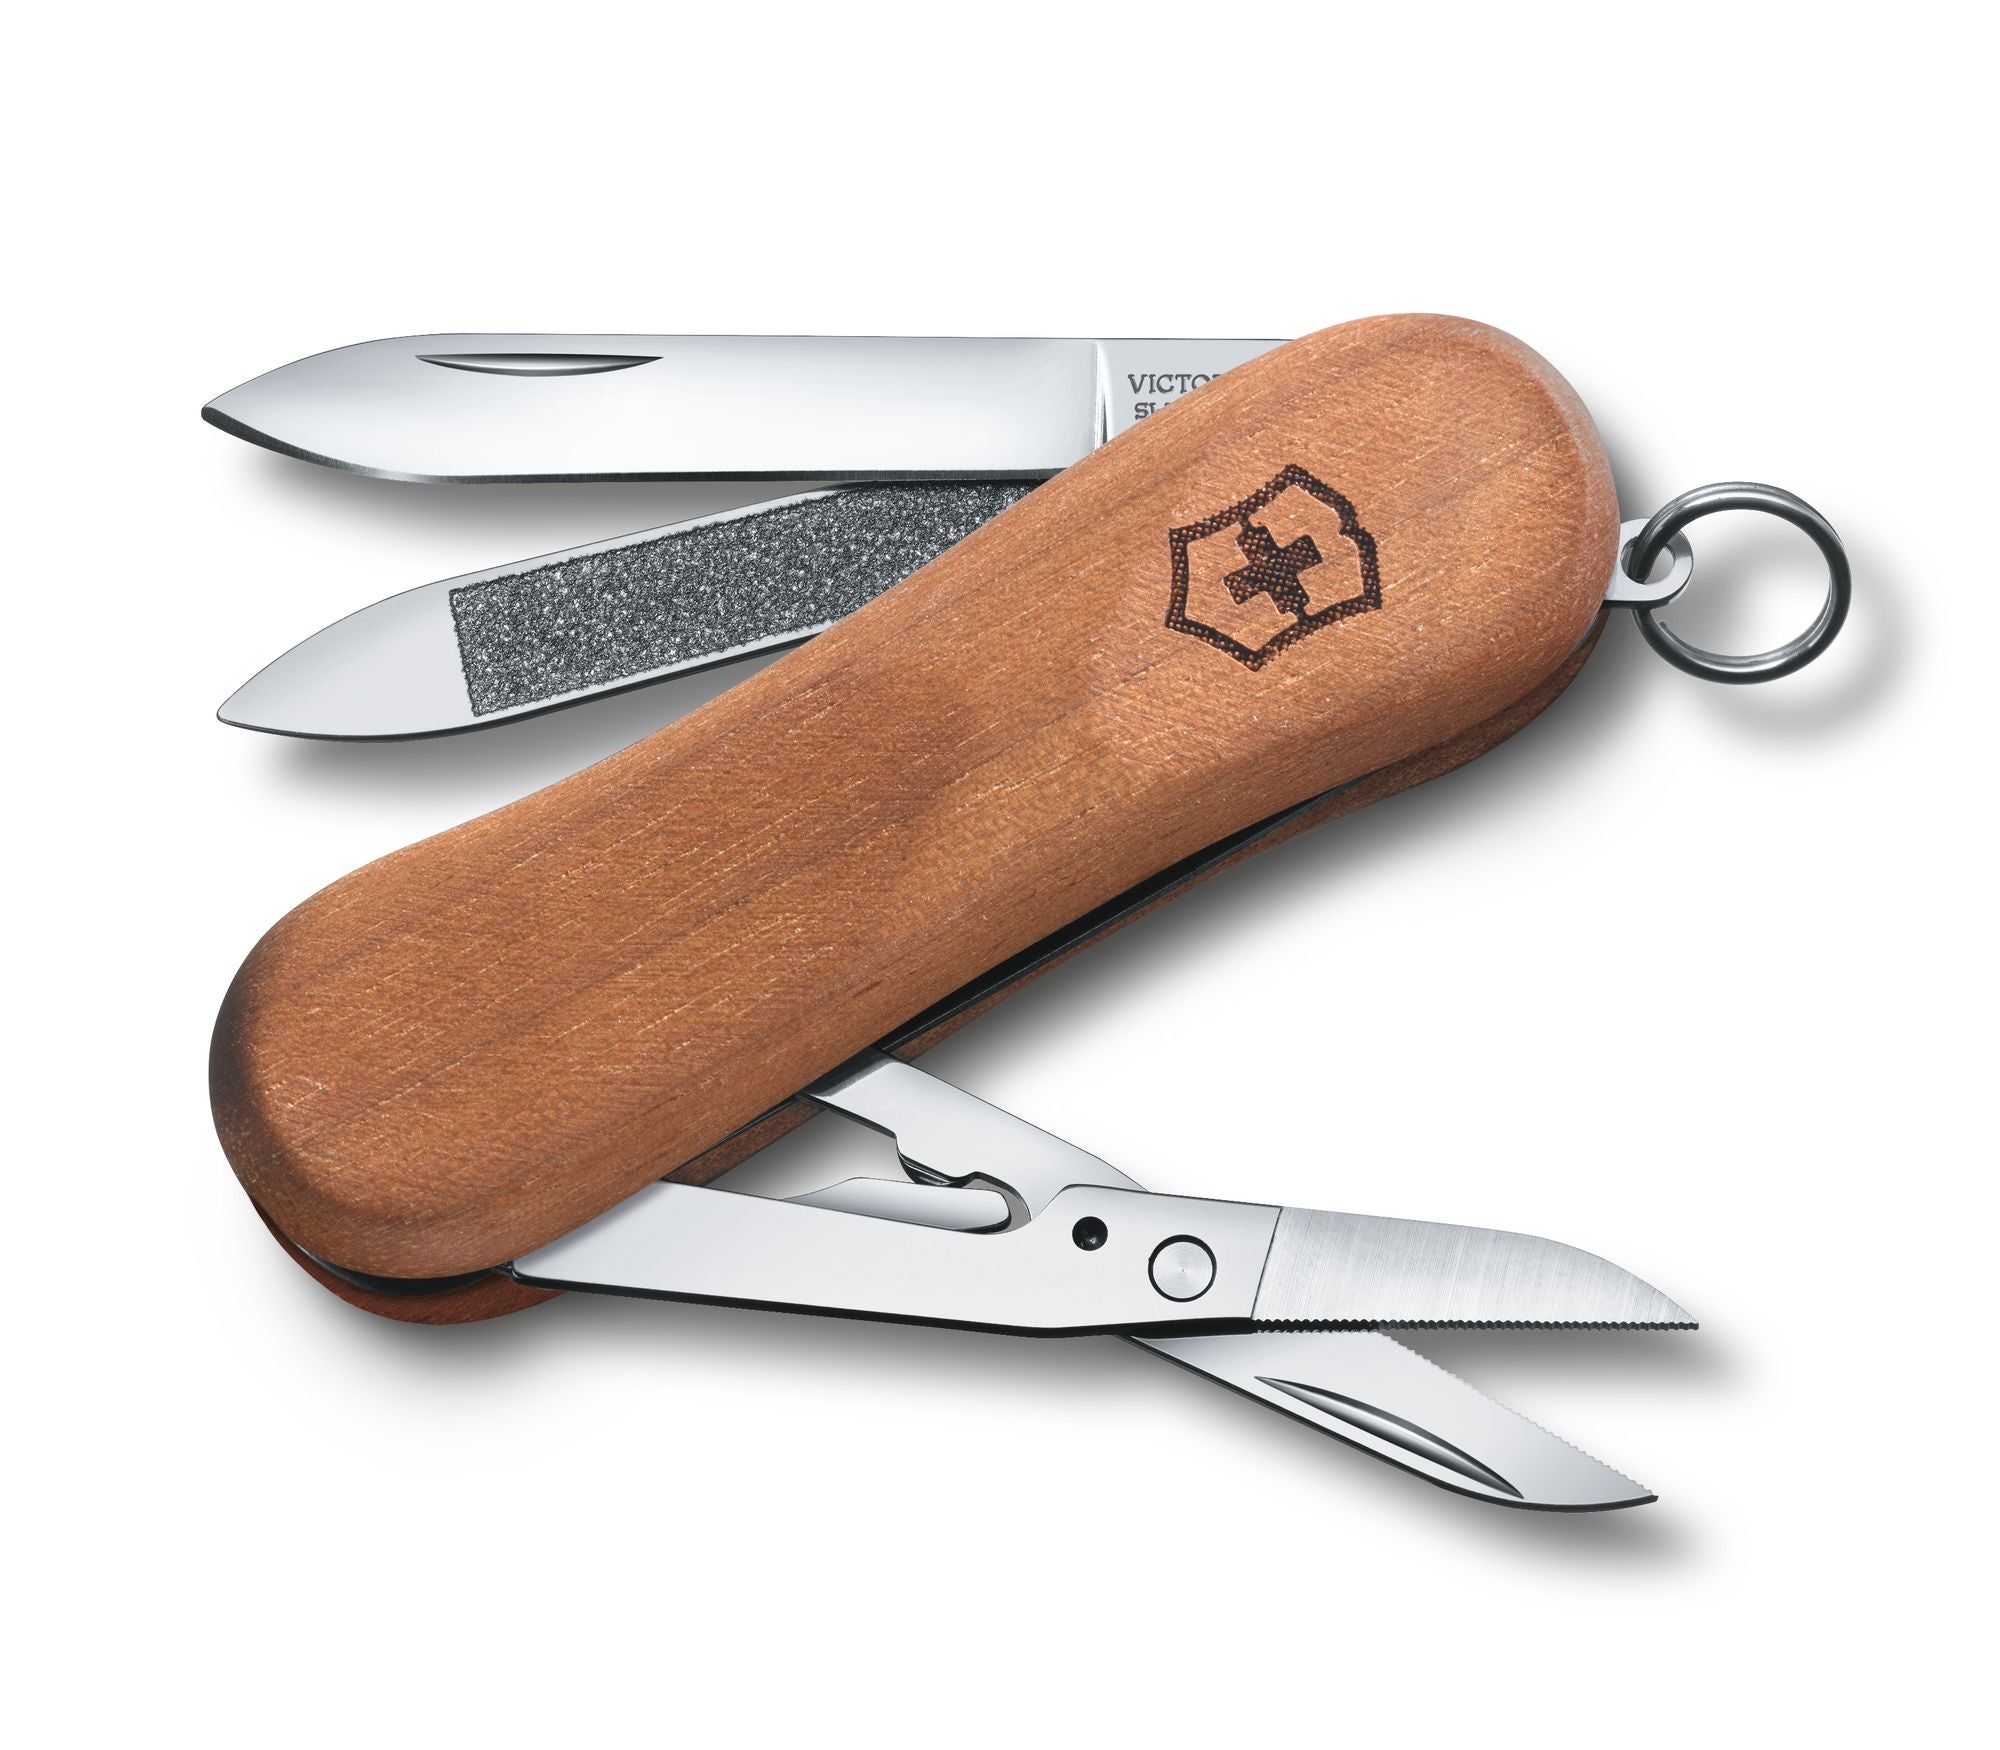 Victorinox Executive Wood 81 pocket knife